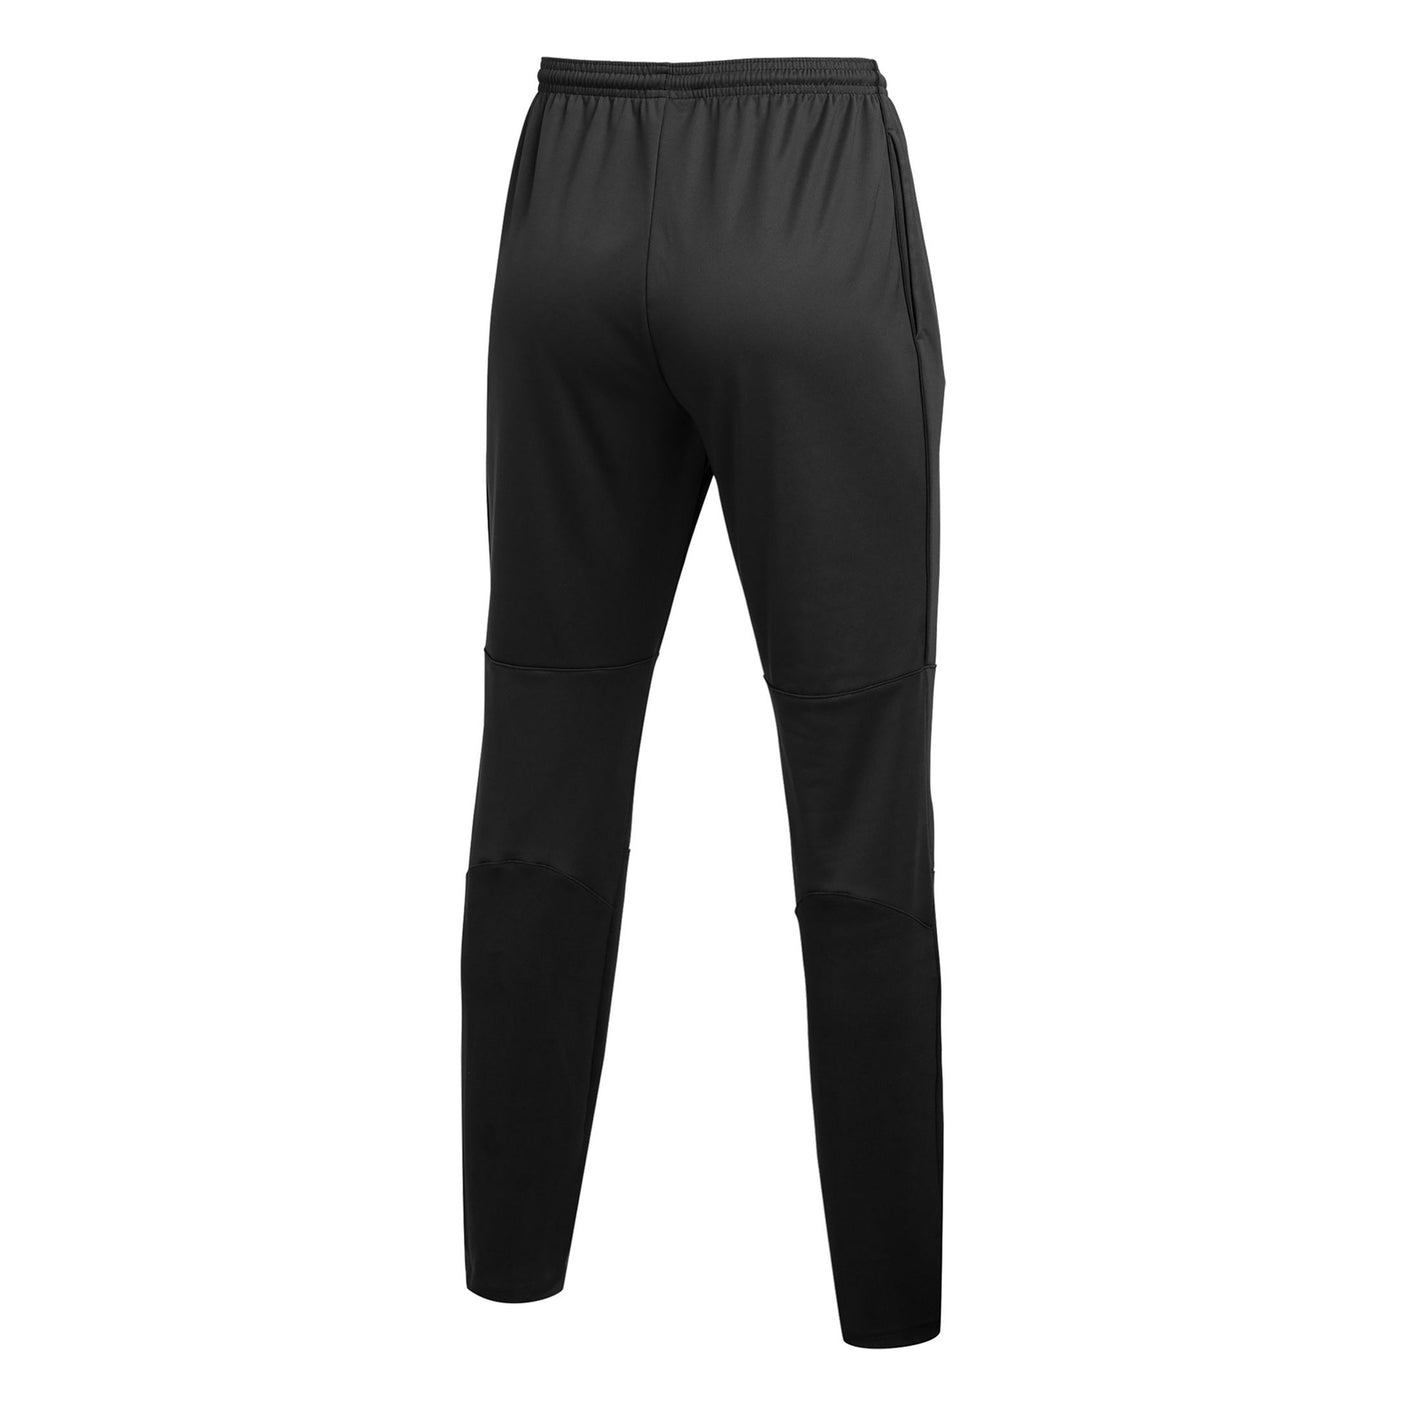 Nike Women's Dri-Fit Pants Black/White Back